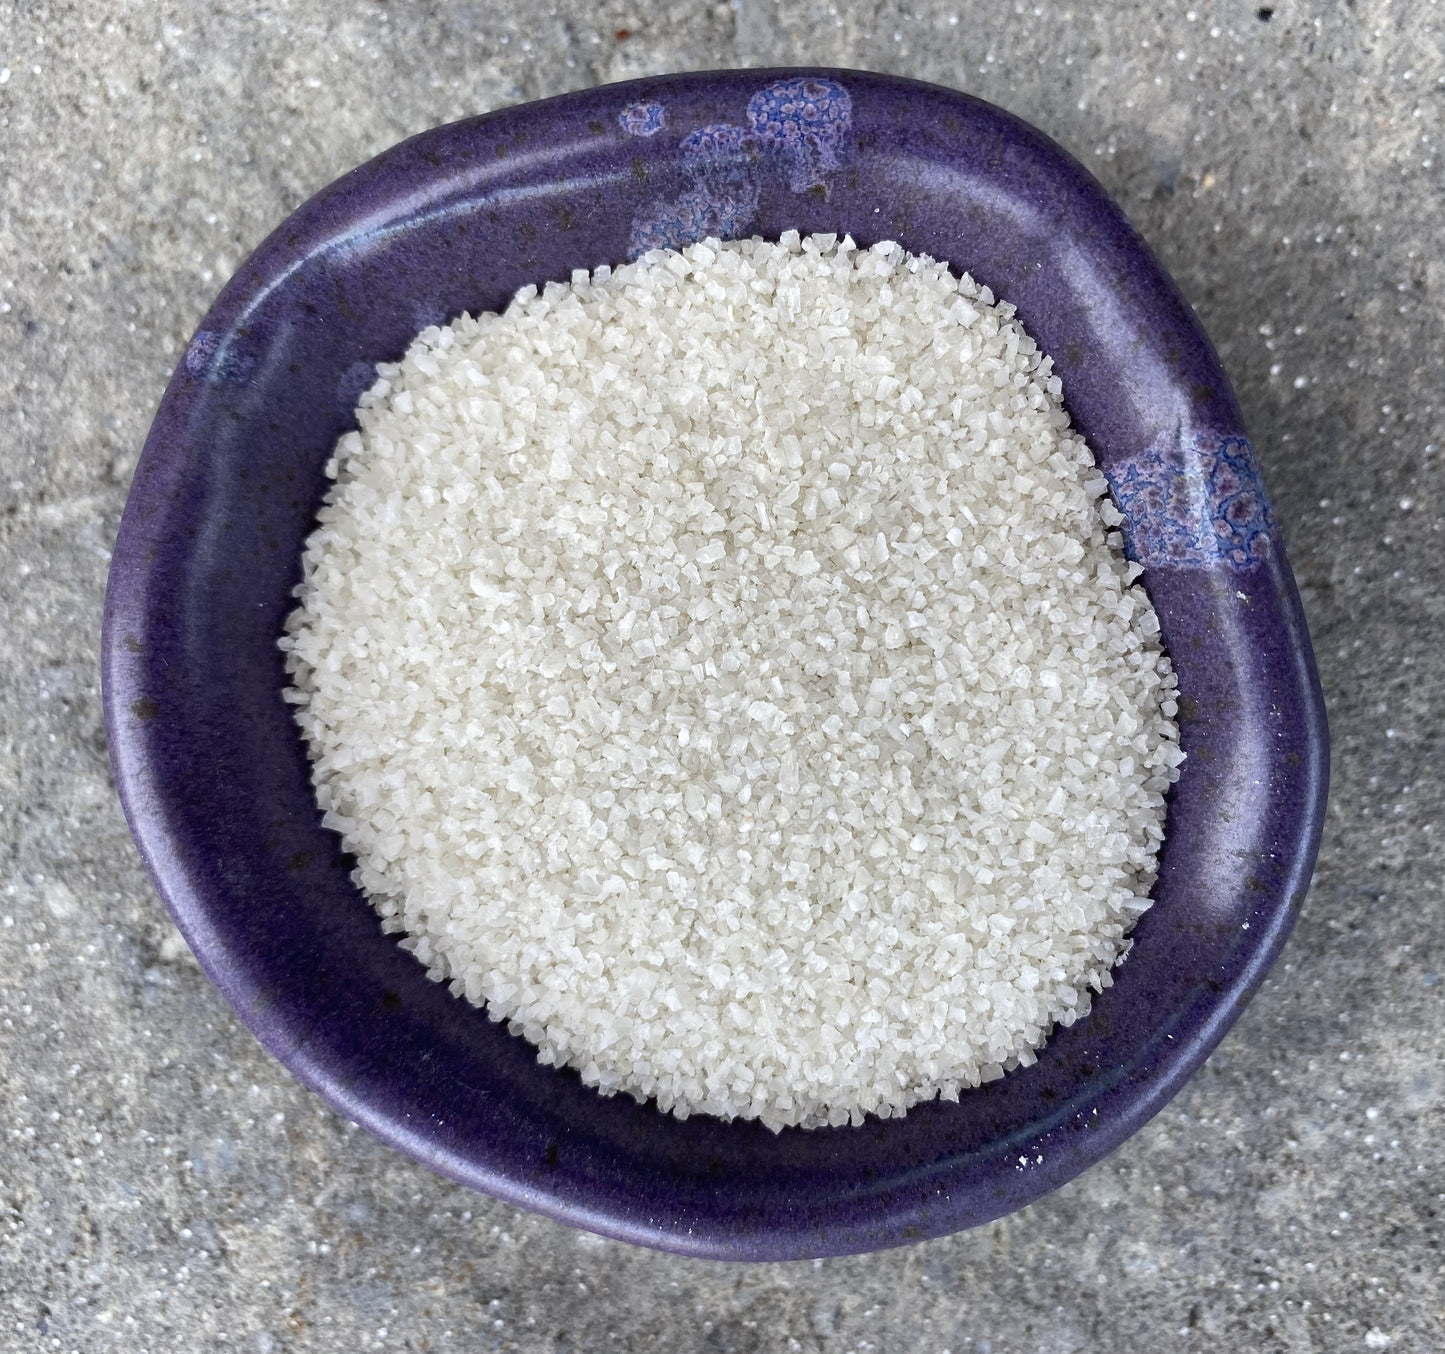 French Grey Sea Salt (Sel Gris) Fine or Coarse Grain Celtic